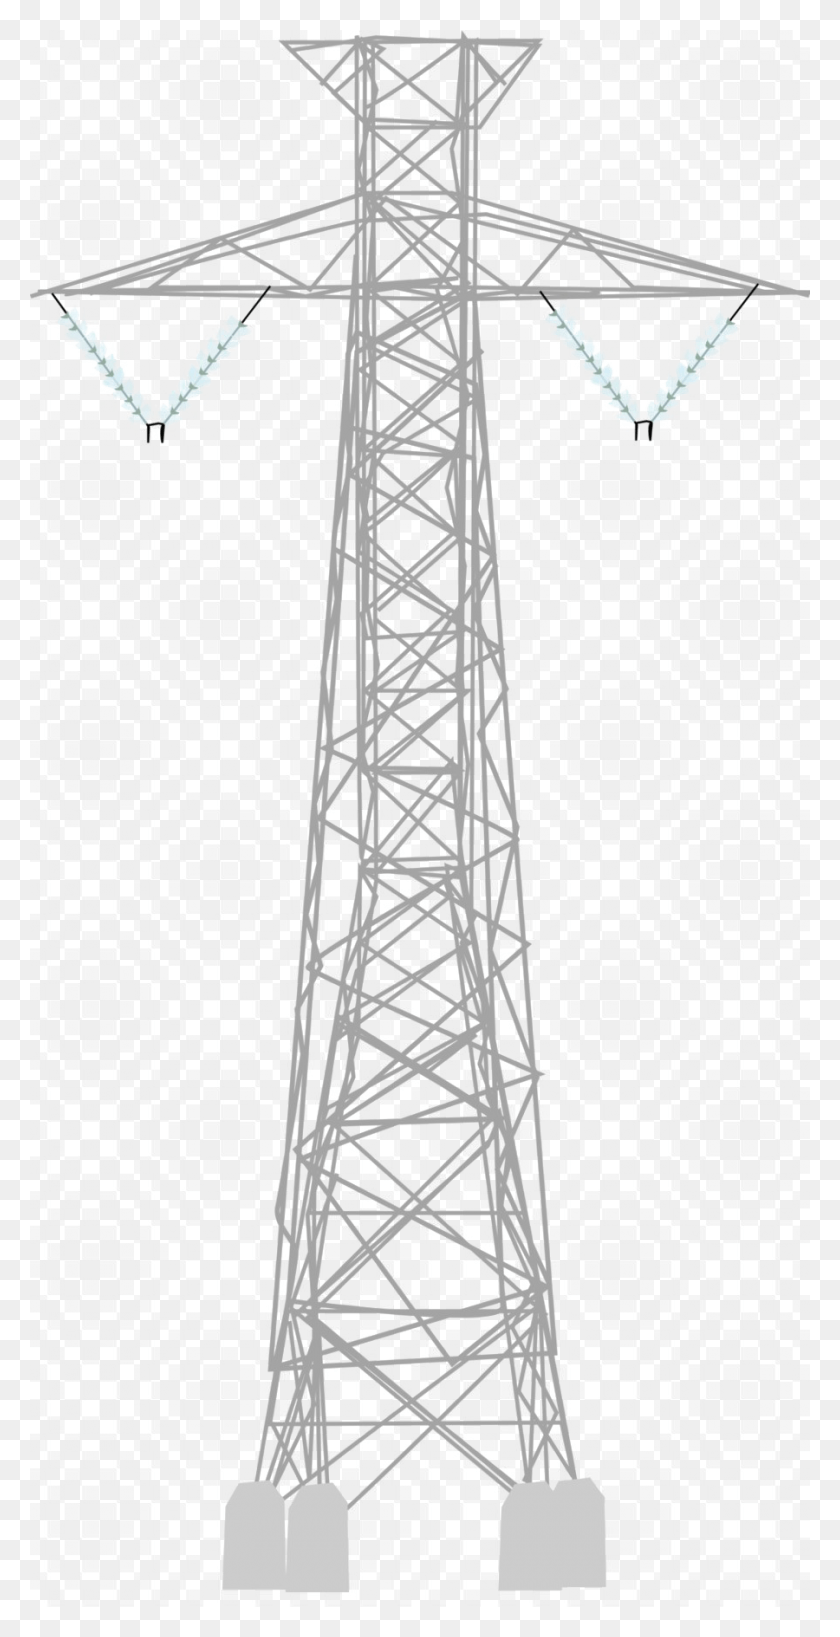 900x1820 Descargar Pngtorre De Transmisión Pic Encaje, Torre De Transmisión Eléctrica, Líneas Eléctricas, Cable Hd Png